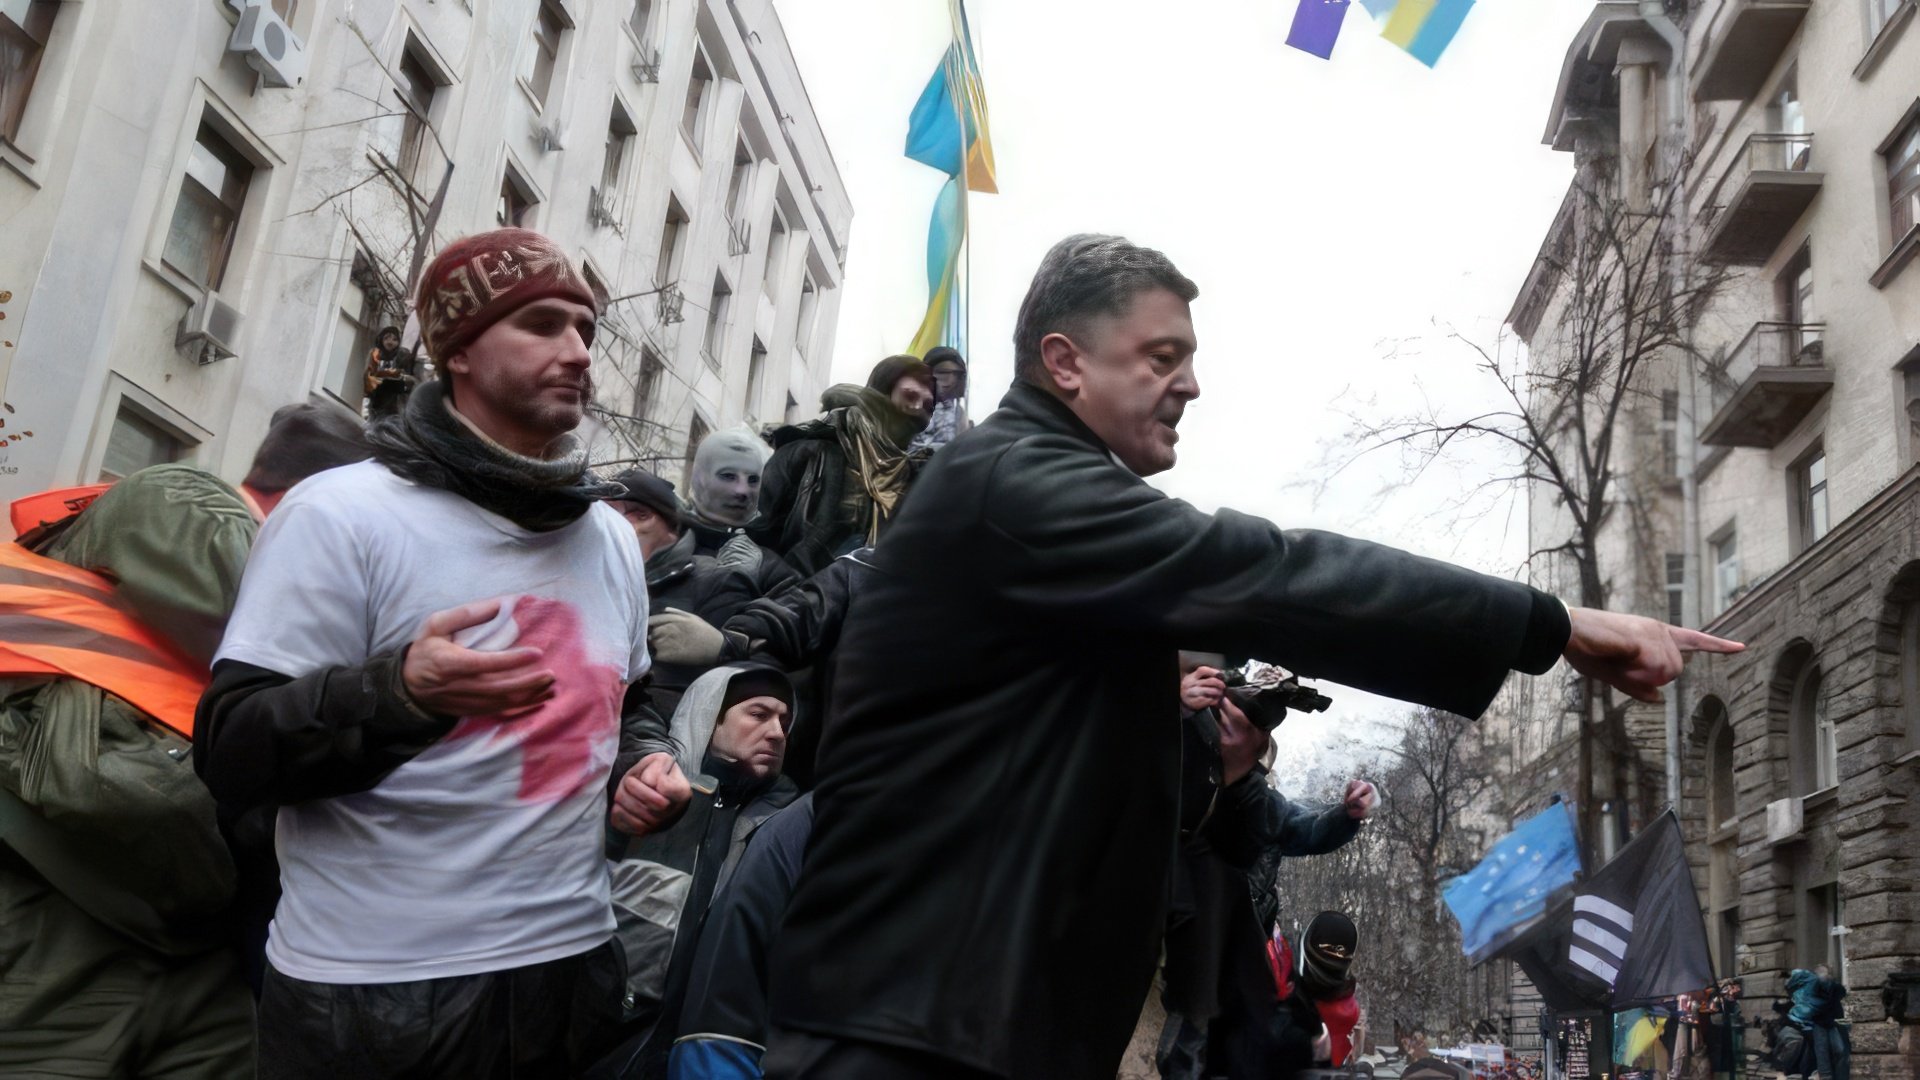 Poroshenko was a supporter of the Maidan